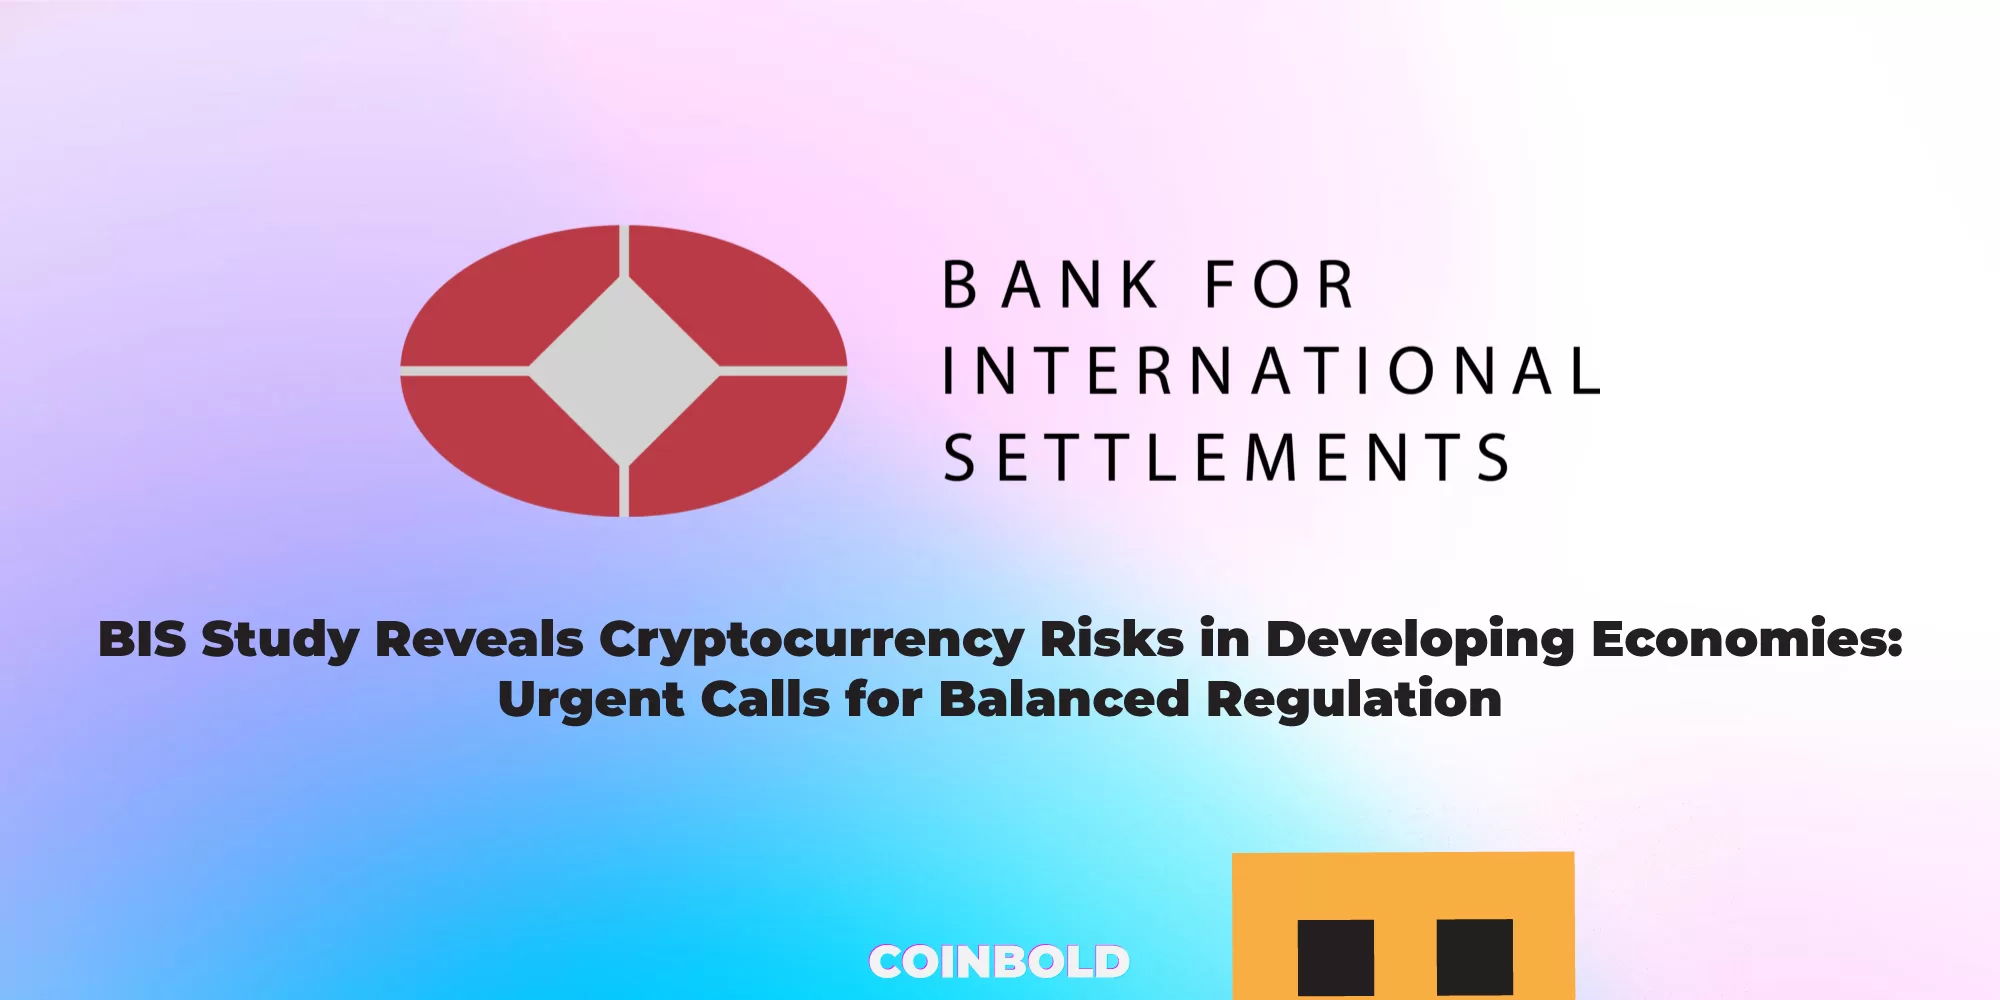 BIS Study Reveals Cryptocurrency Risks in Developing Economies Urgent Calls for Balanced Regulation